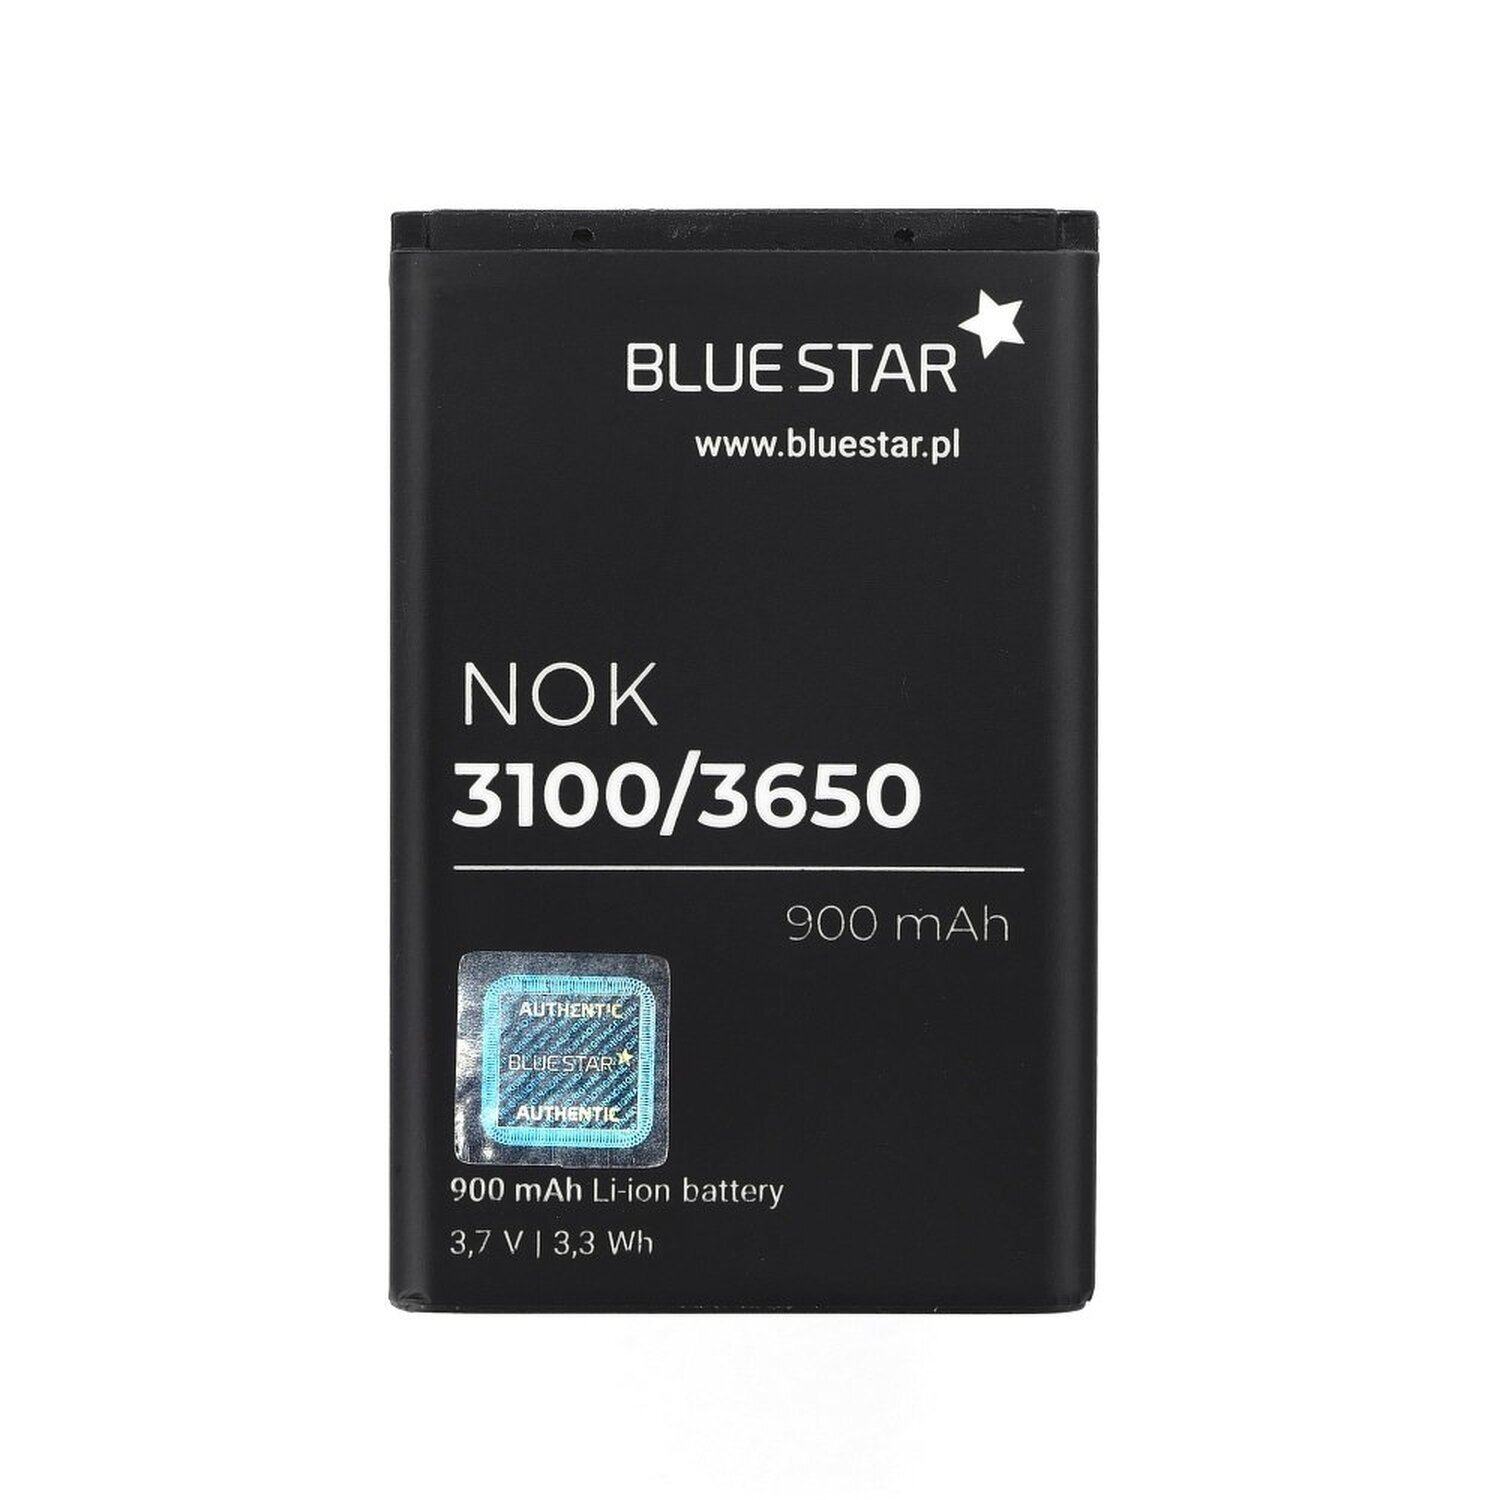 BLUESTAR Akku für Nokia E50 / / Handyakku Li-Ion / N71 N72 / E60 N70